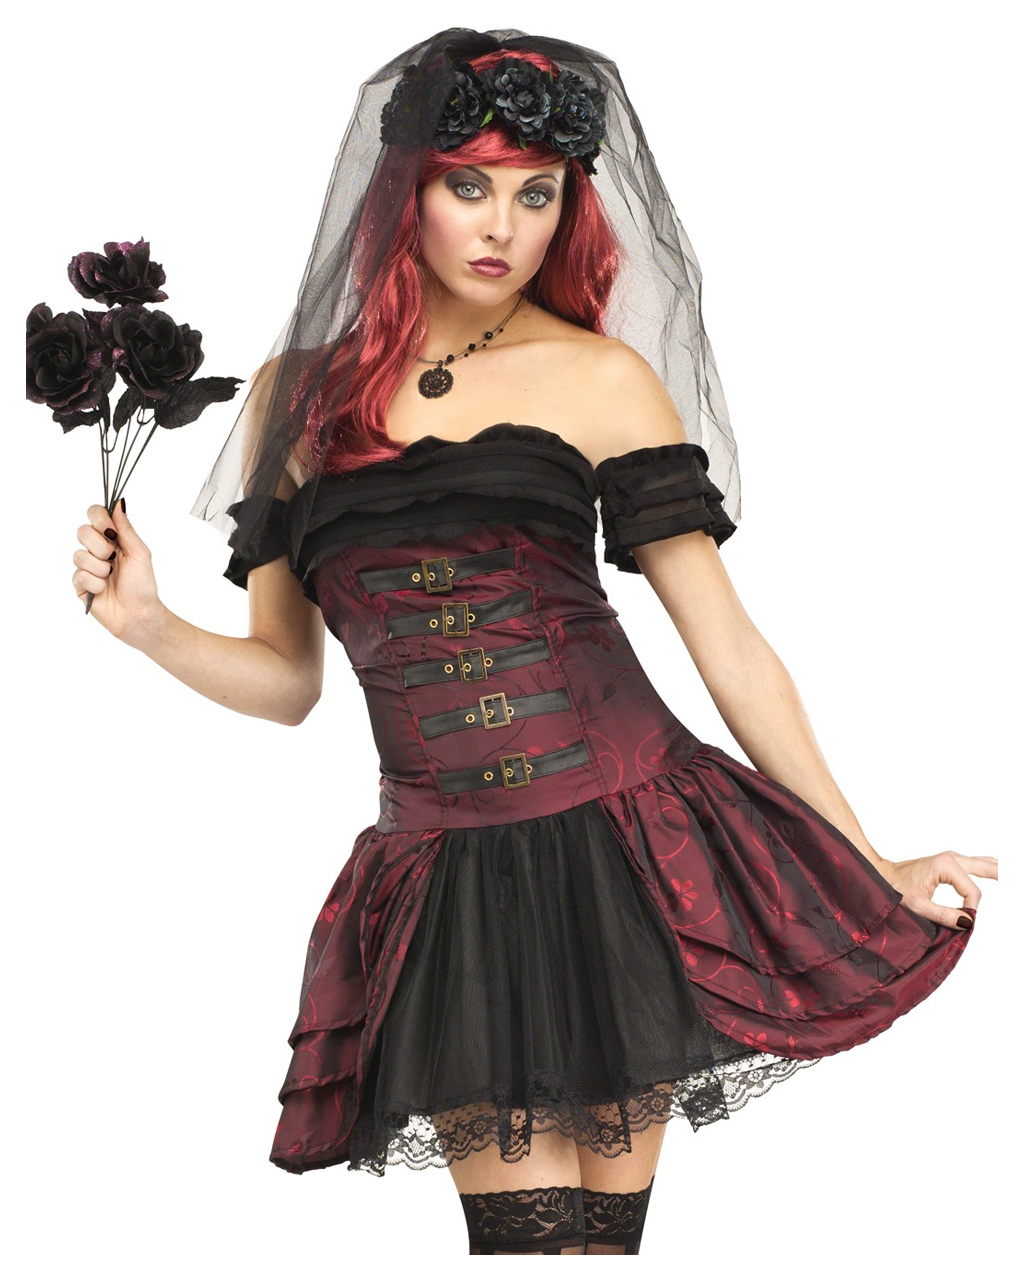 1280 × 1027 Source:https://www.horror-shop.com/gb/p/draculas-bride-costume....